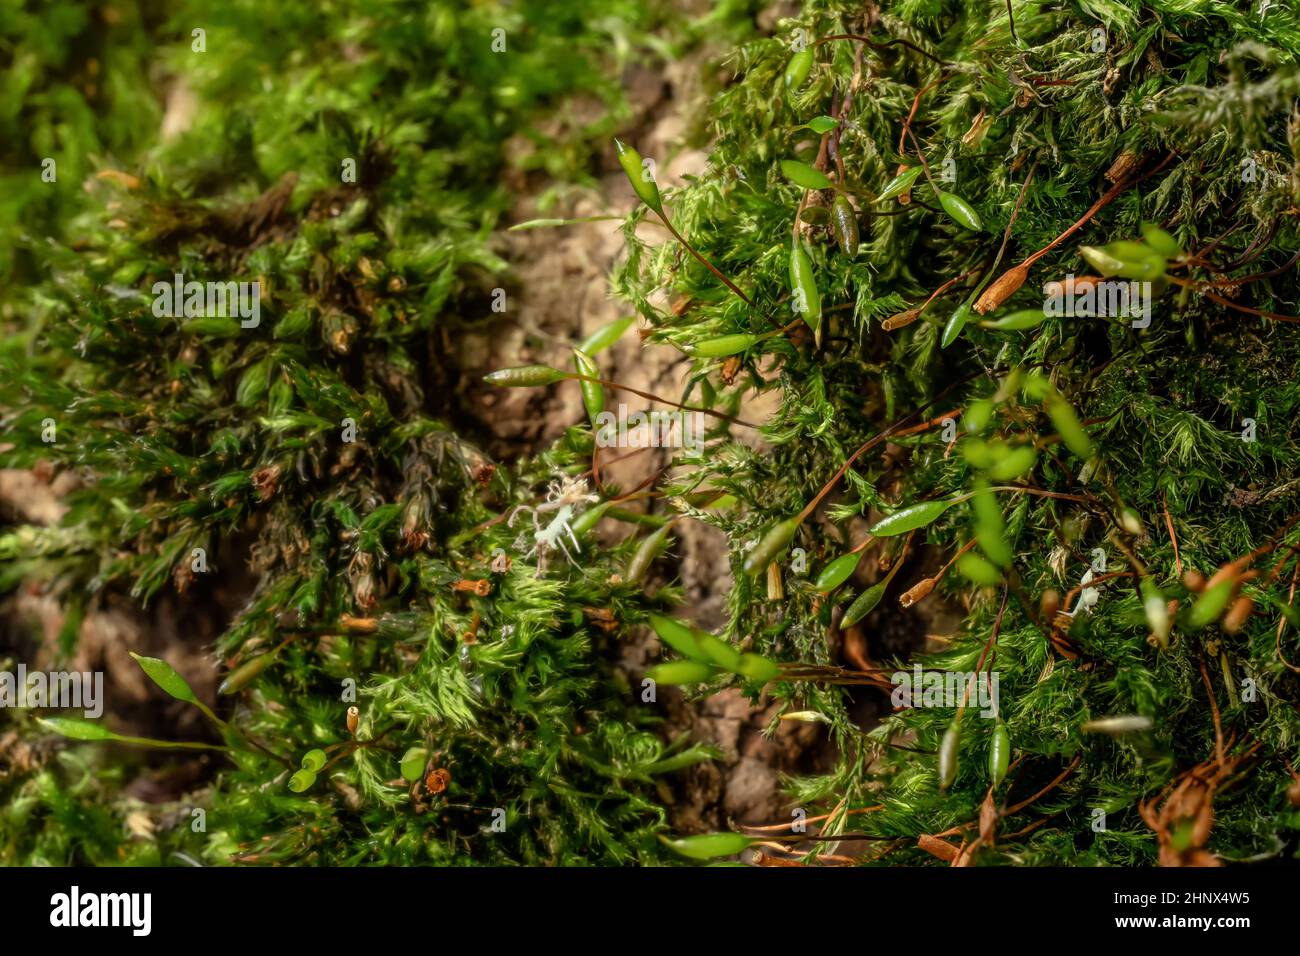 Fine green moss, - Brachytheciastrum velutinum species - growing on tree bark , closeup detail. Stock Photo